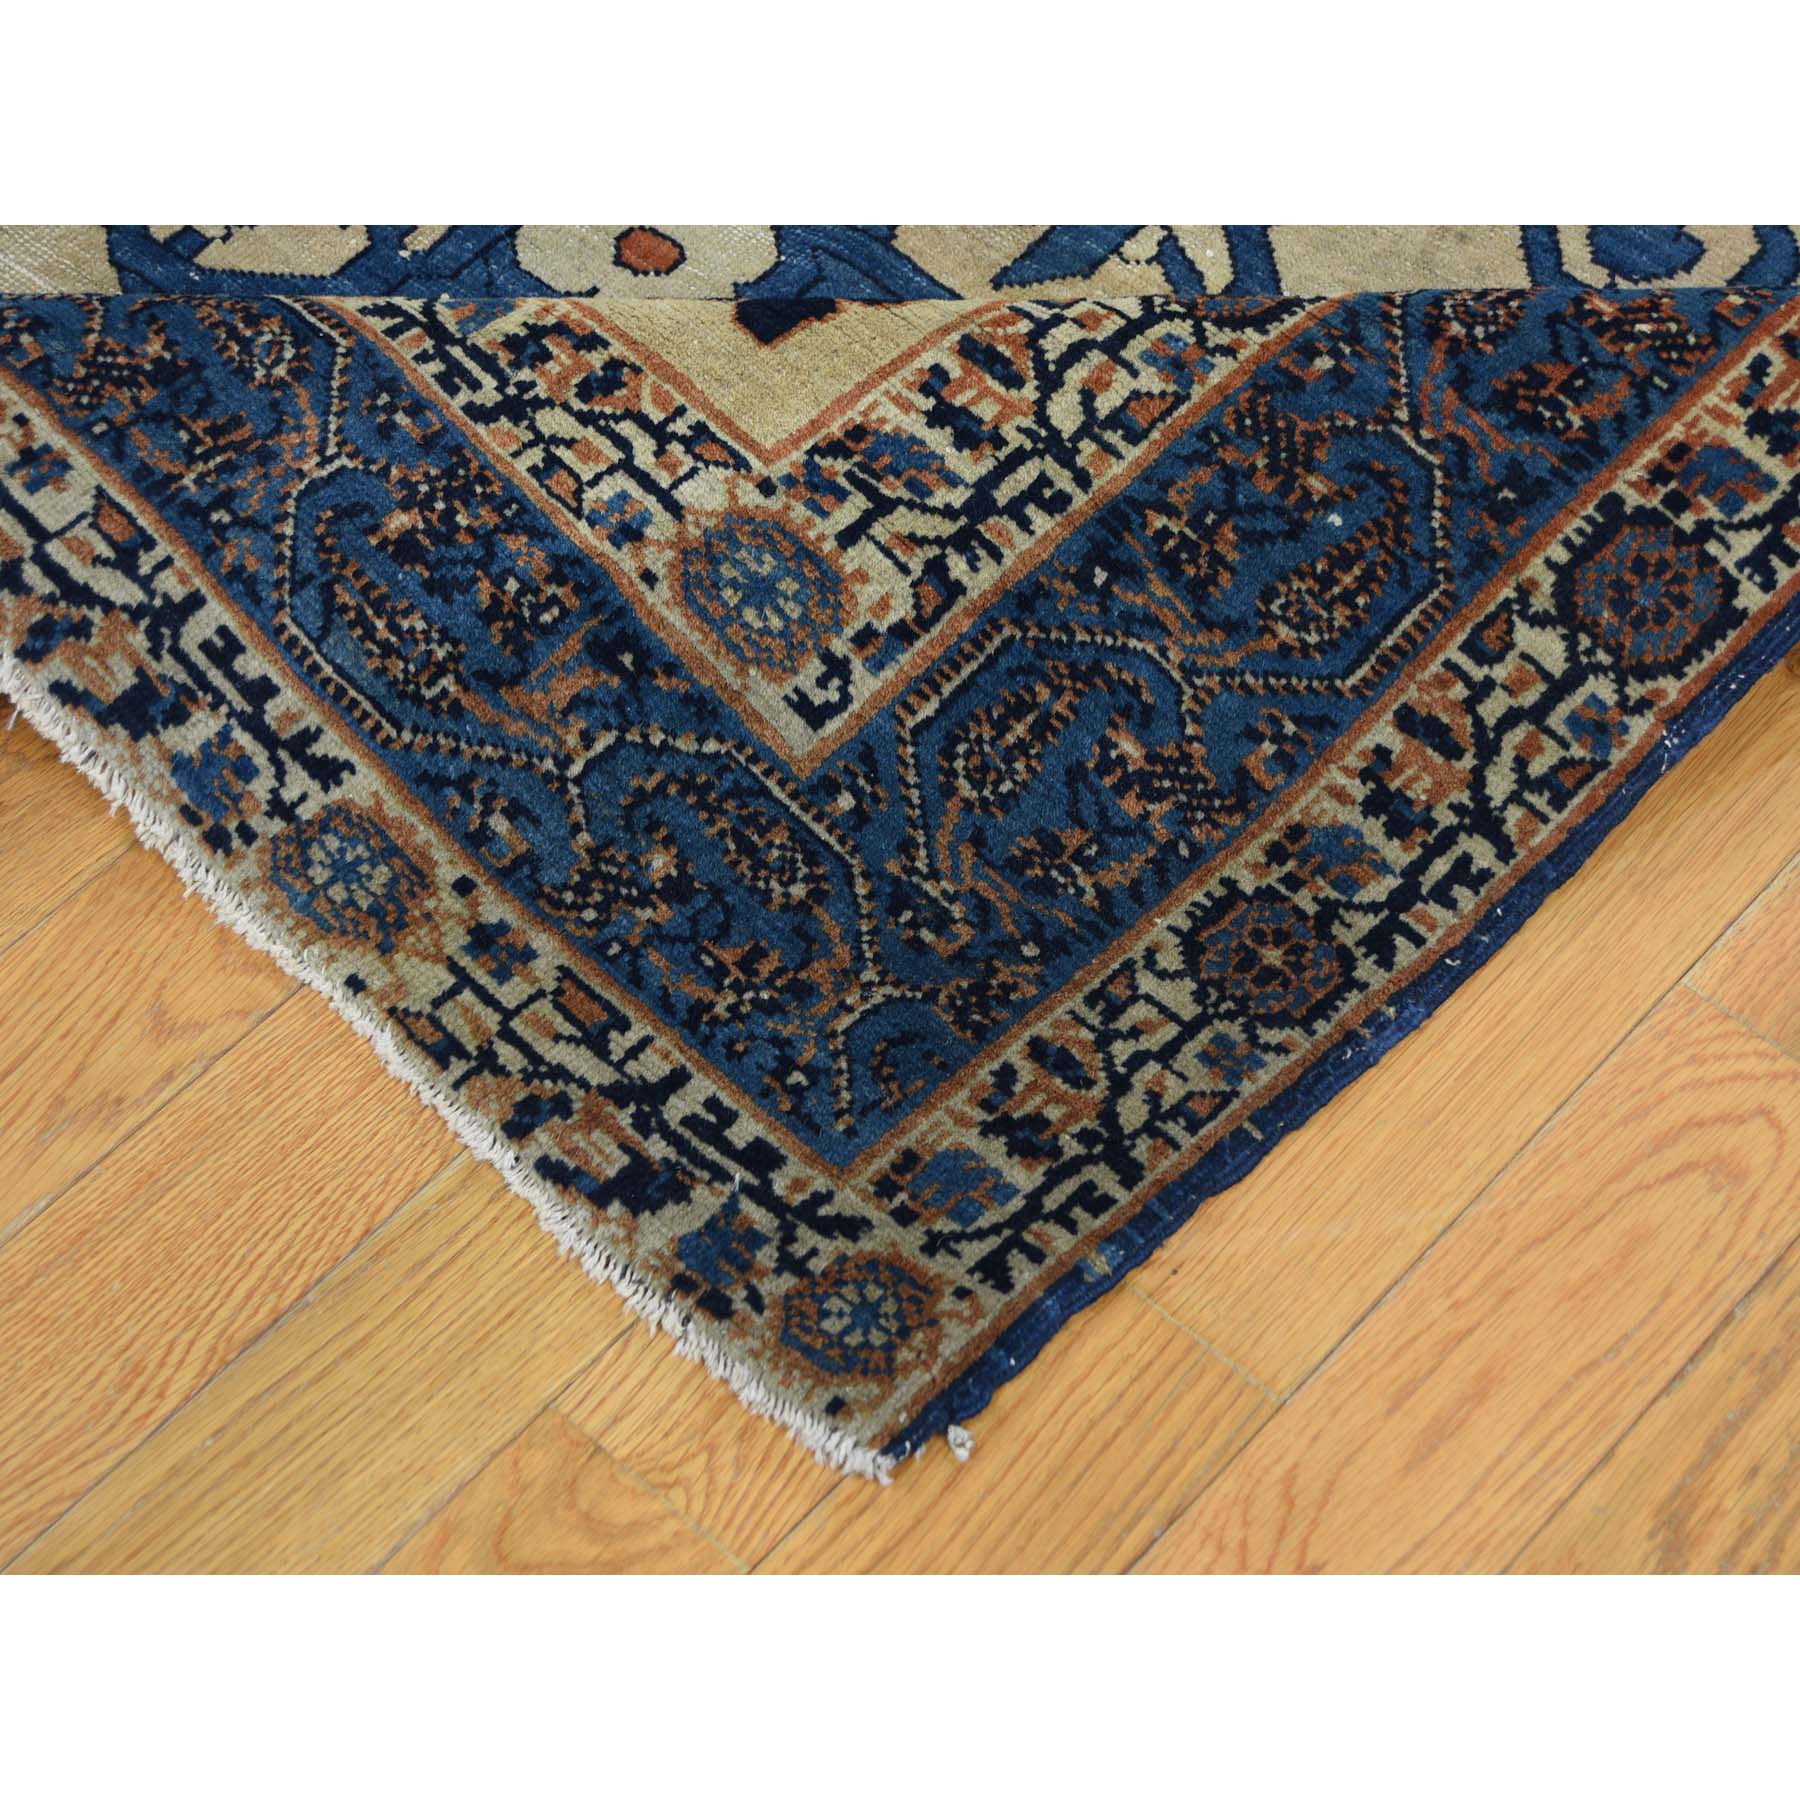 8'4"x12'6" Antique Persian Serapi Good Cond Even Wear Oriental Rug 